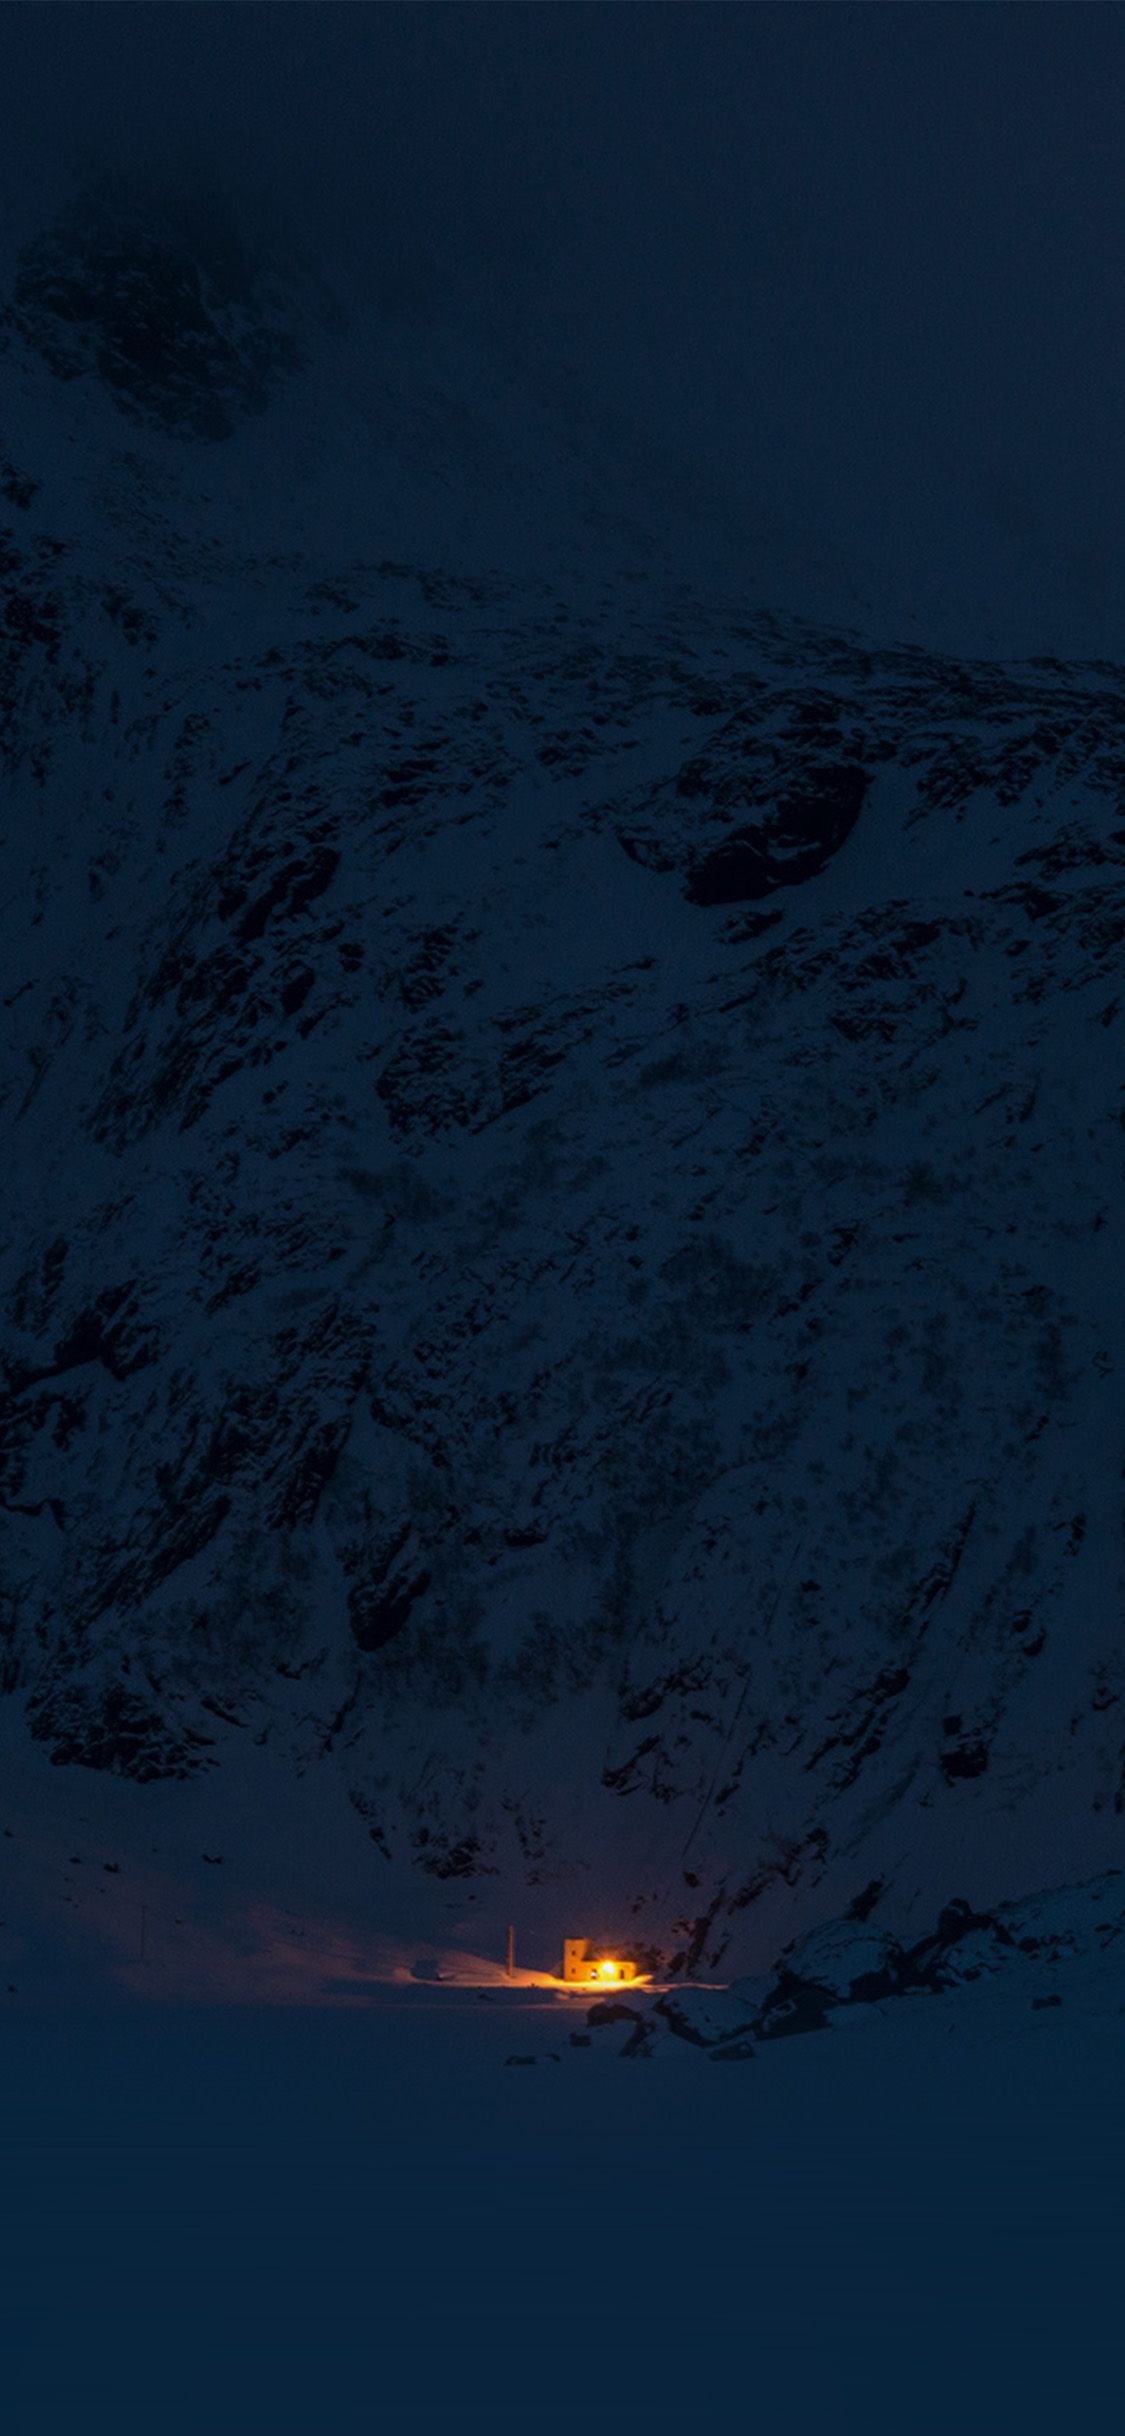 iPhone X wallpaper. mountain night light snow winter nature